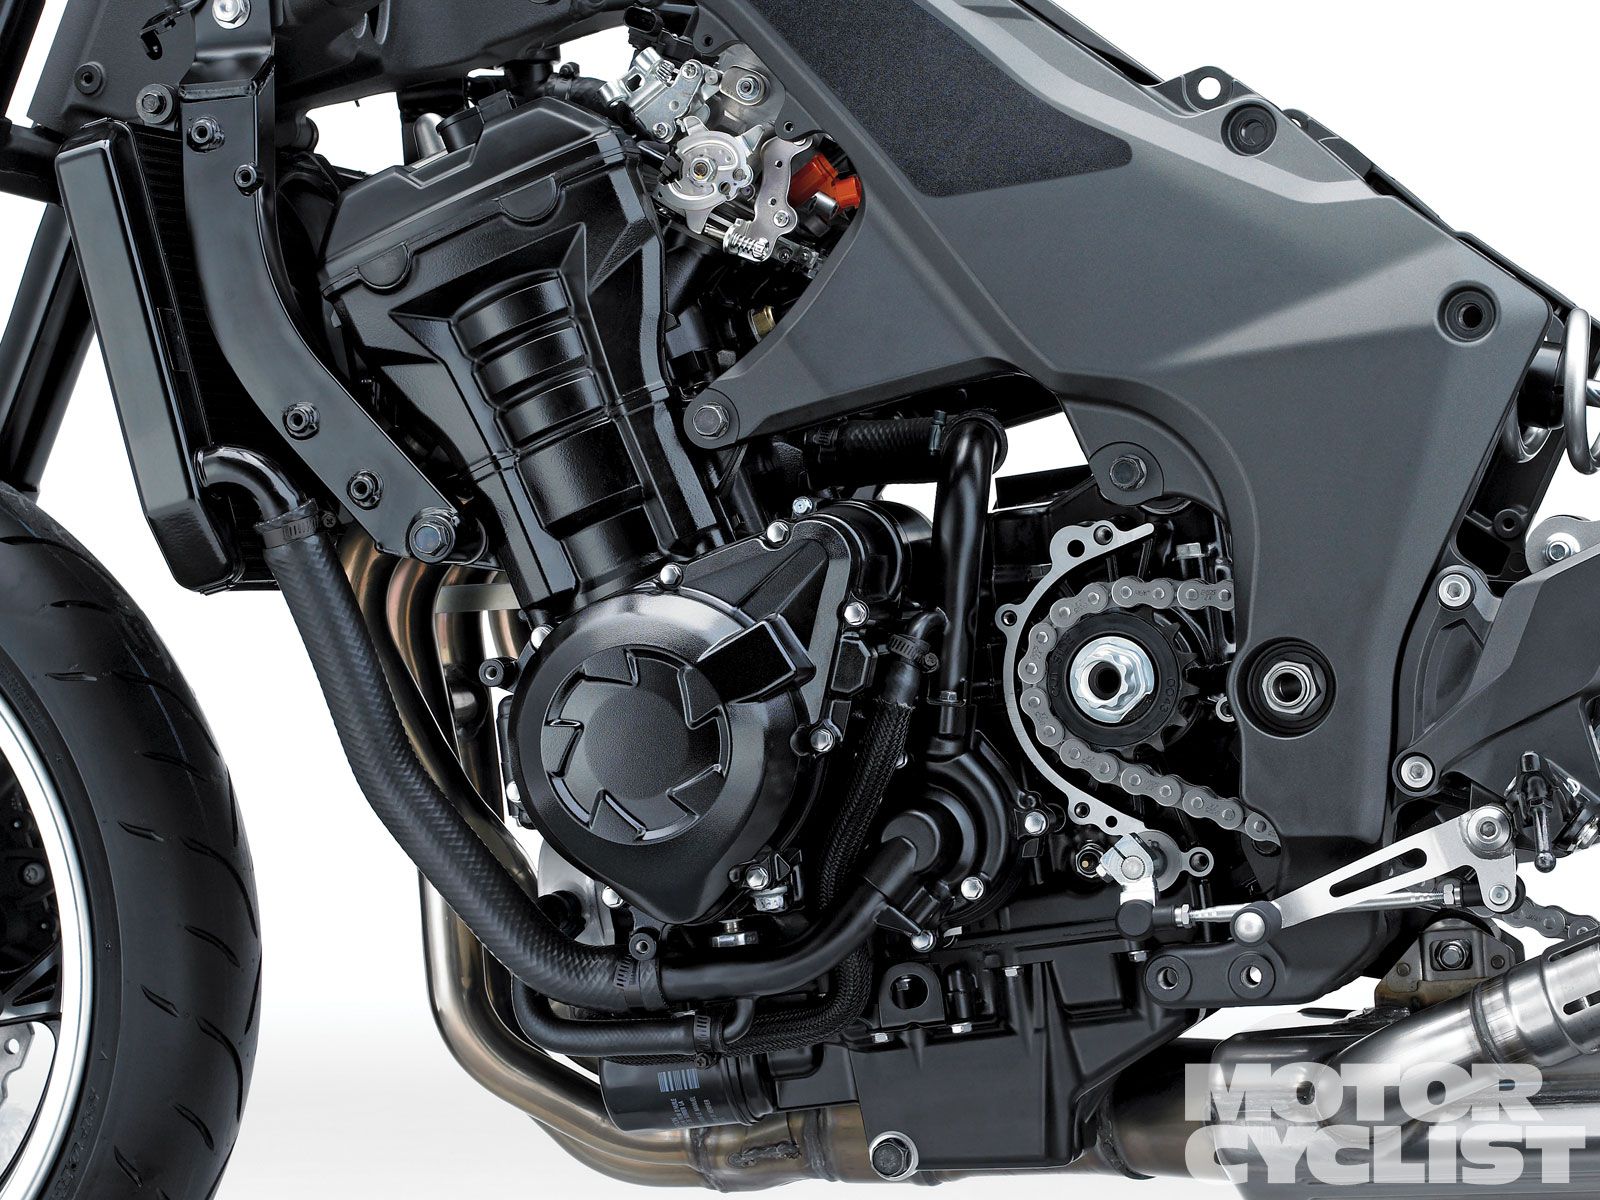 2010 Kawasaki Z1000 - Practically Naked | Motorcyclist